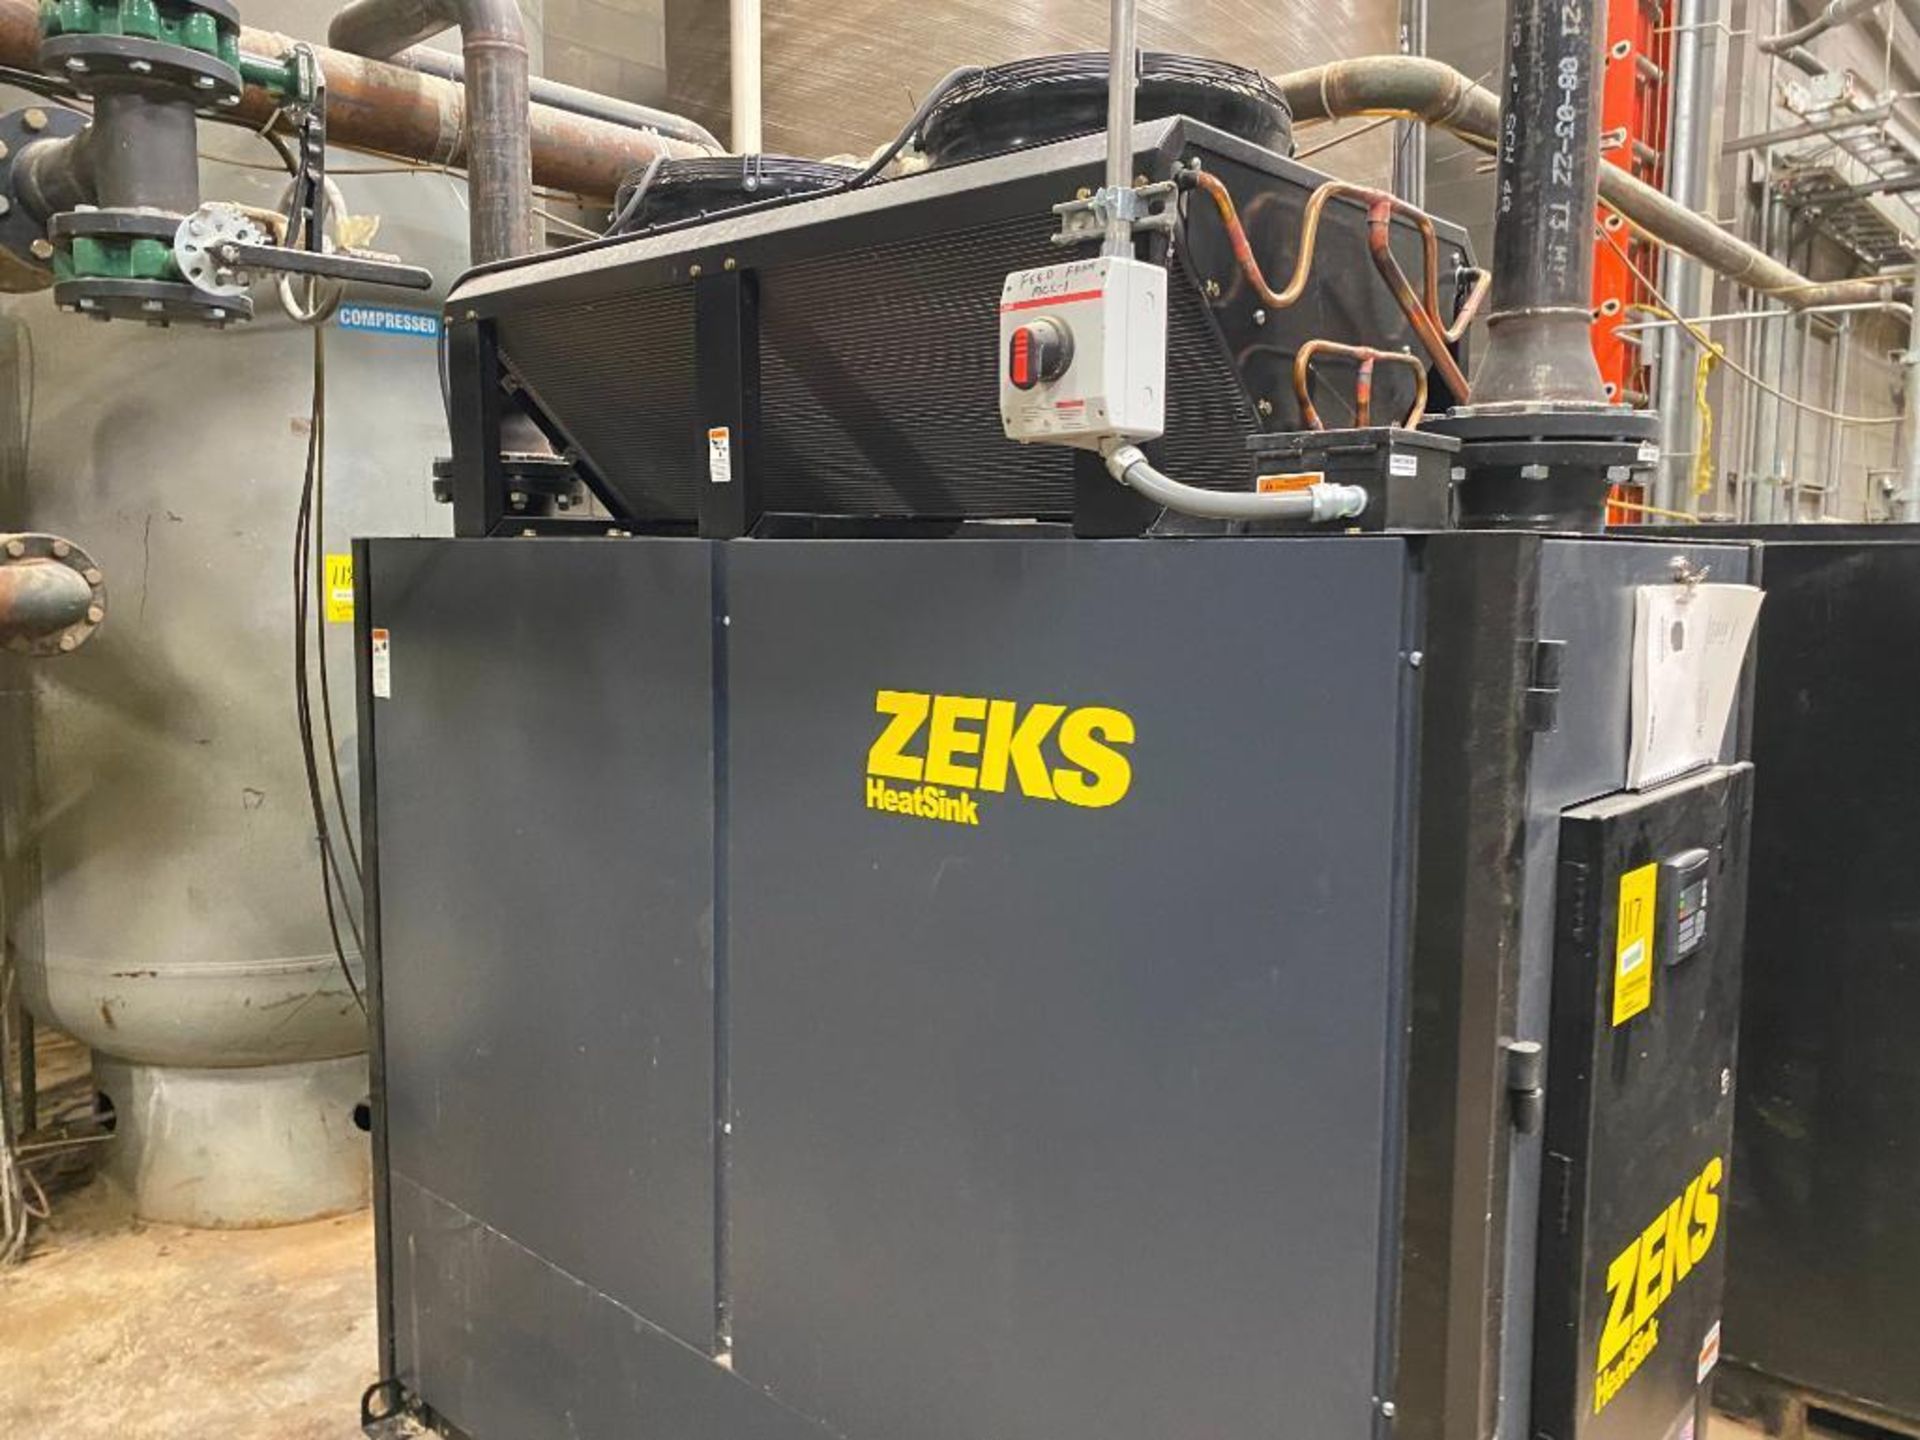 ZEKS HeatSink Compressed Air Dryer, Model 2400HSGA40G000, S/N WCH1064991, 460 V, 200 Max. PSI - Image 3 of 4